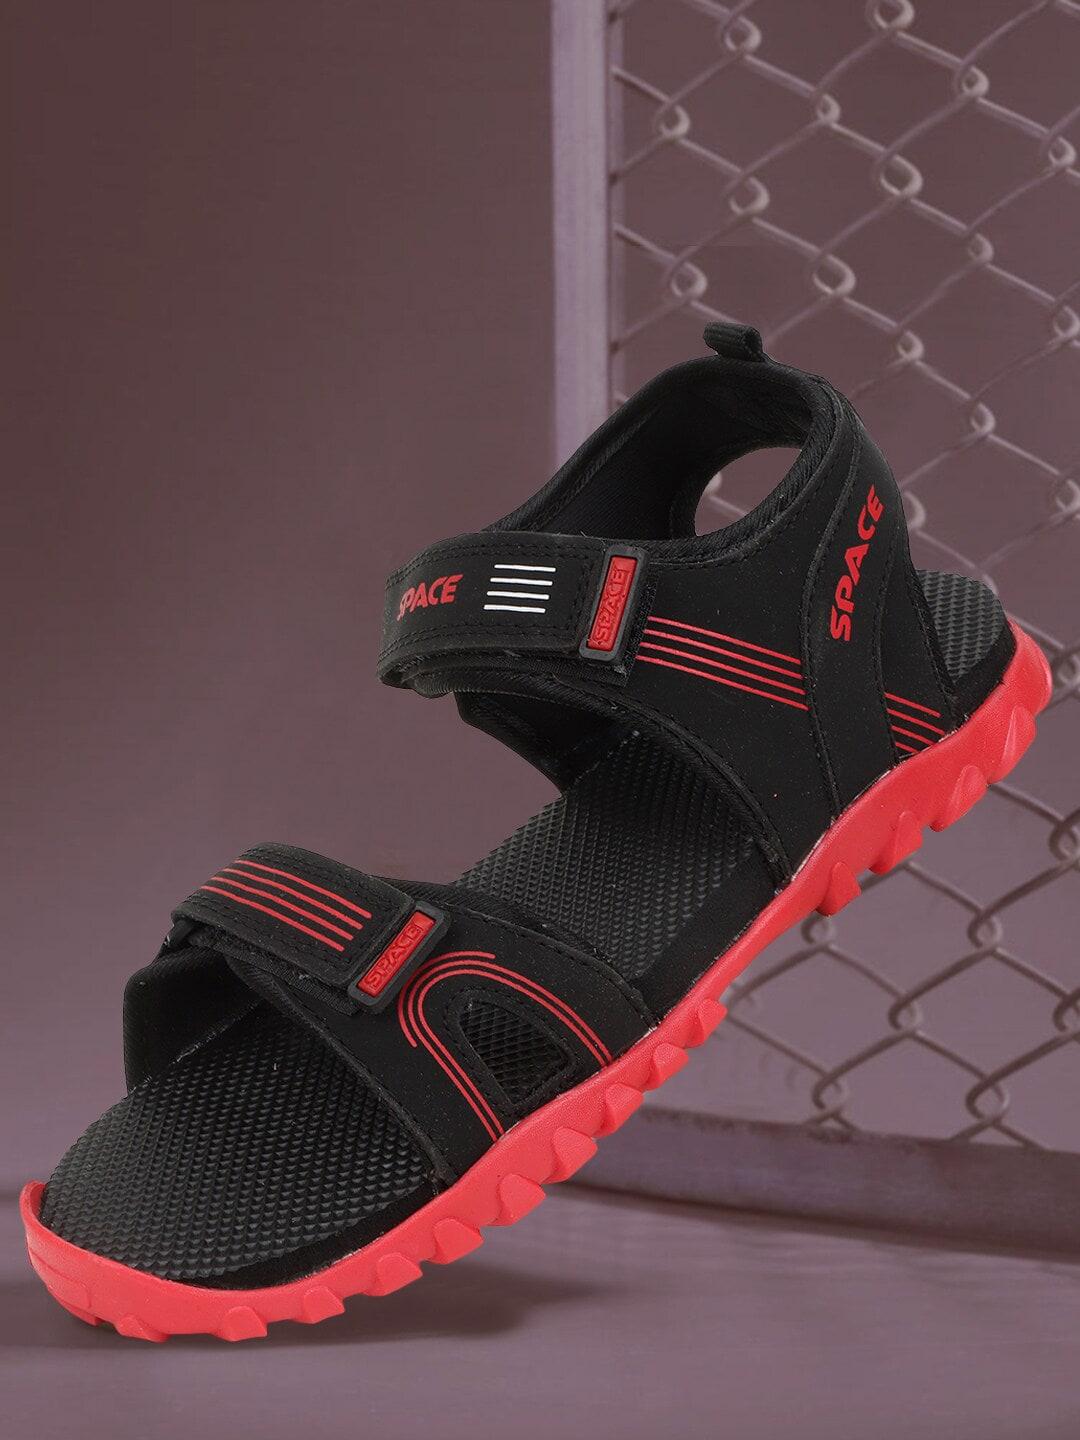 space-men-black-&-red-lightweight-sports-sandals